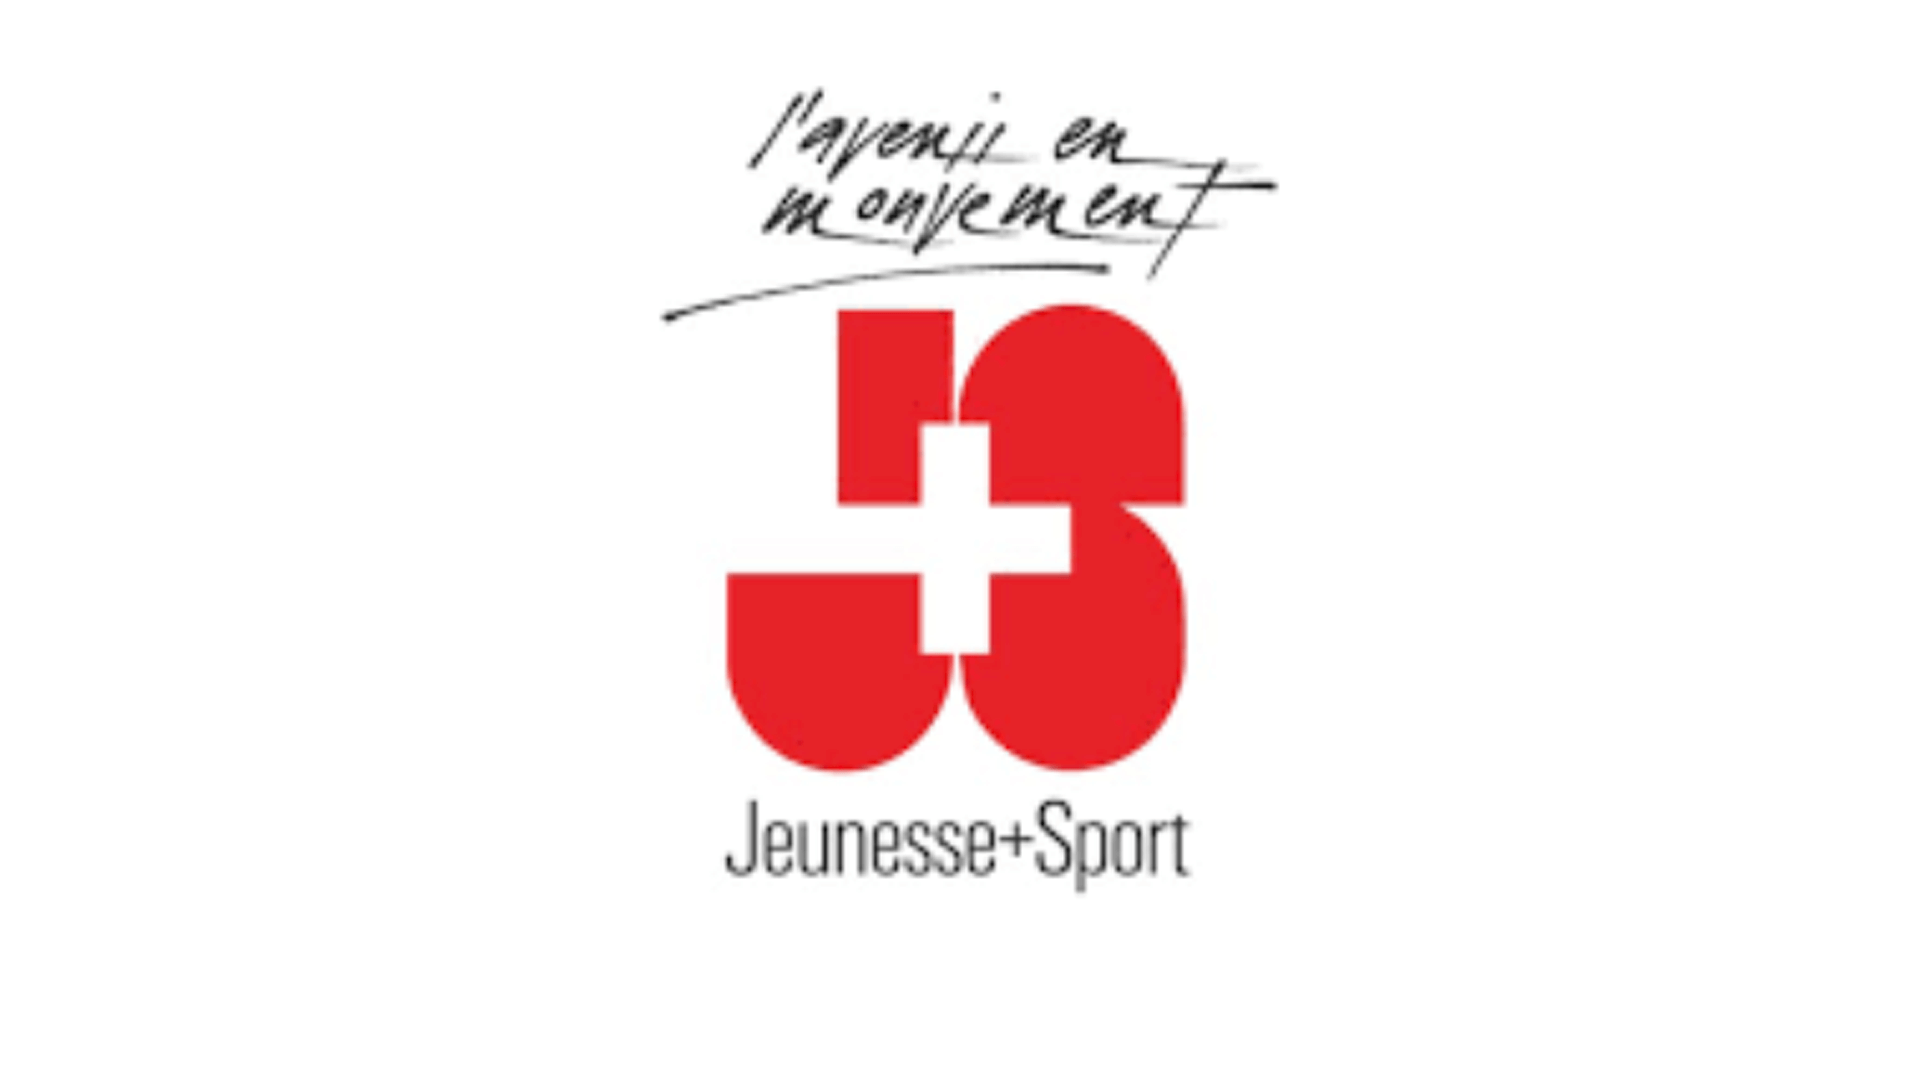 Logo JS